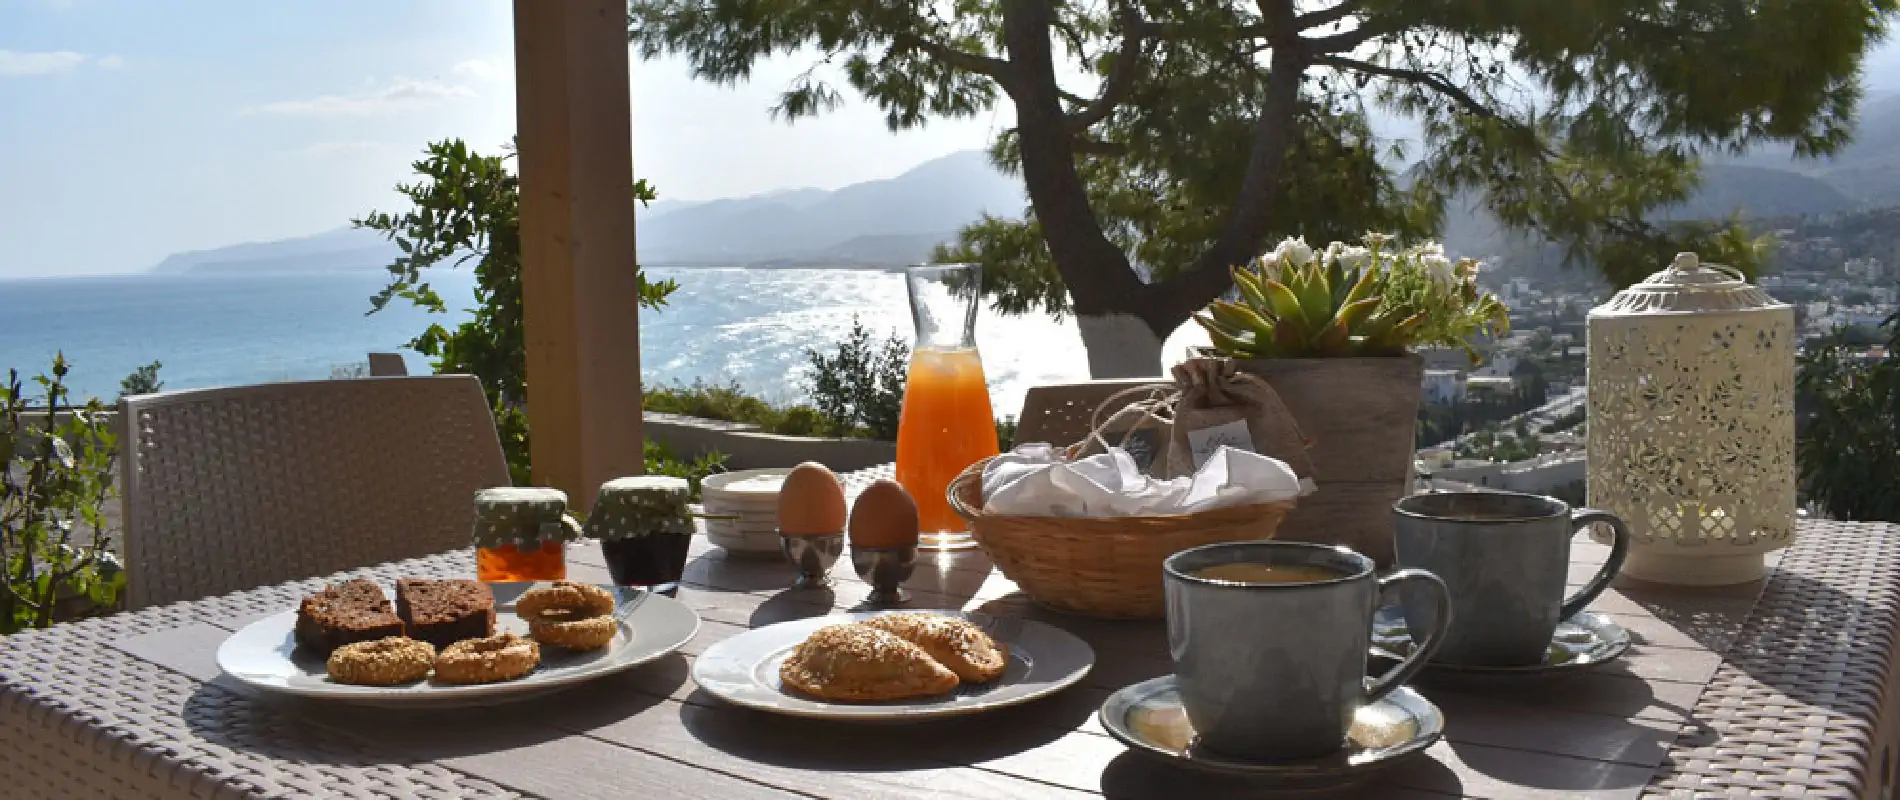 Breakfast overlooking Stalis Bay